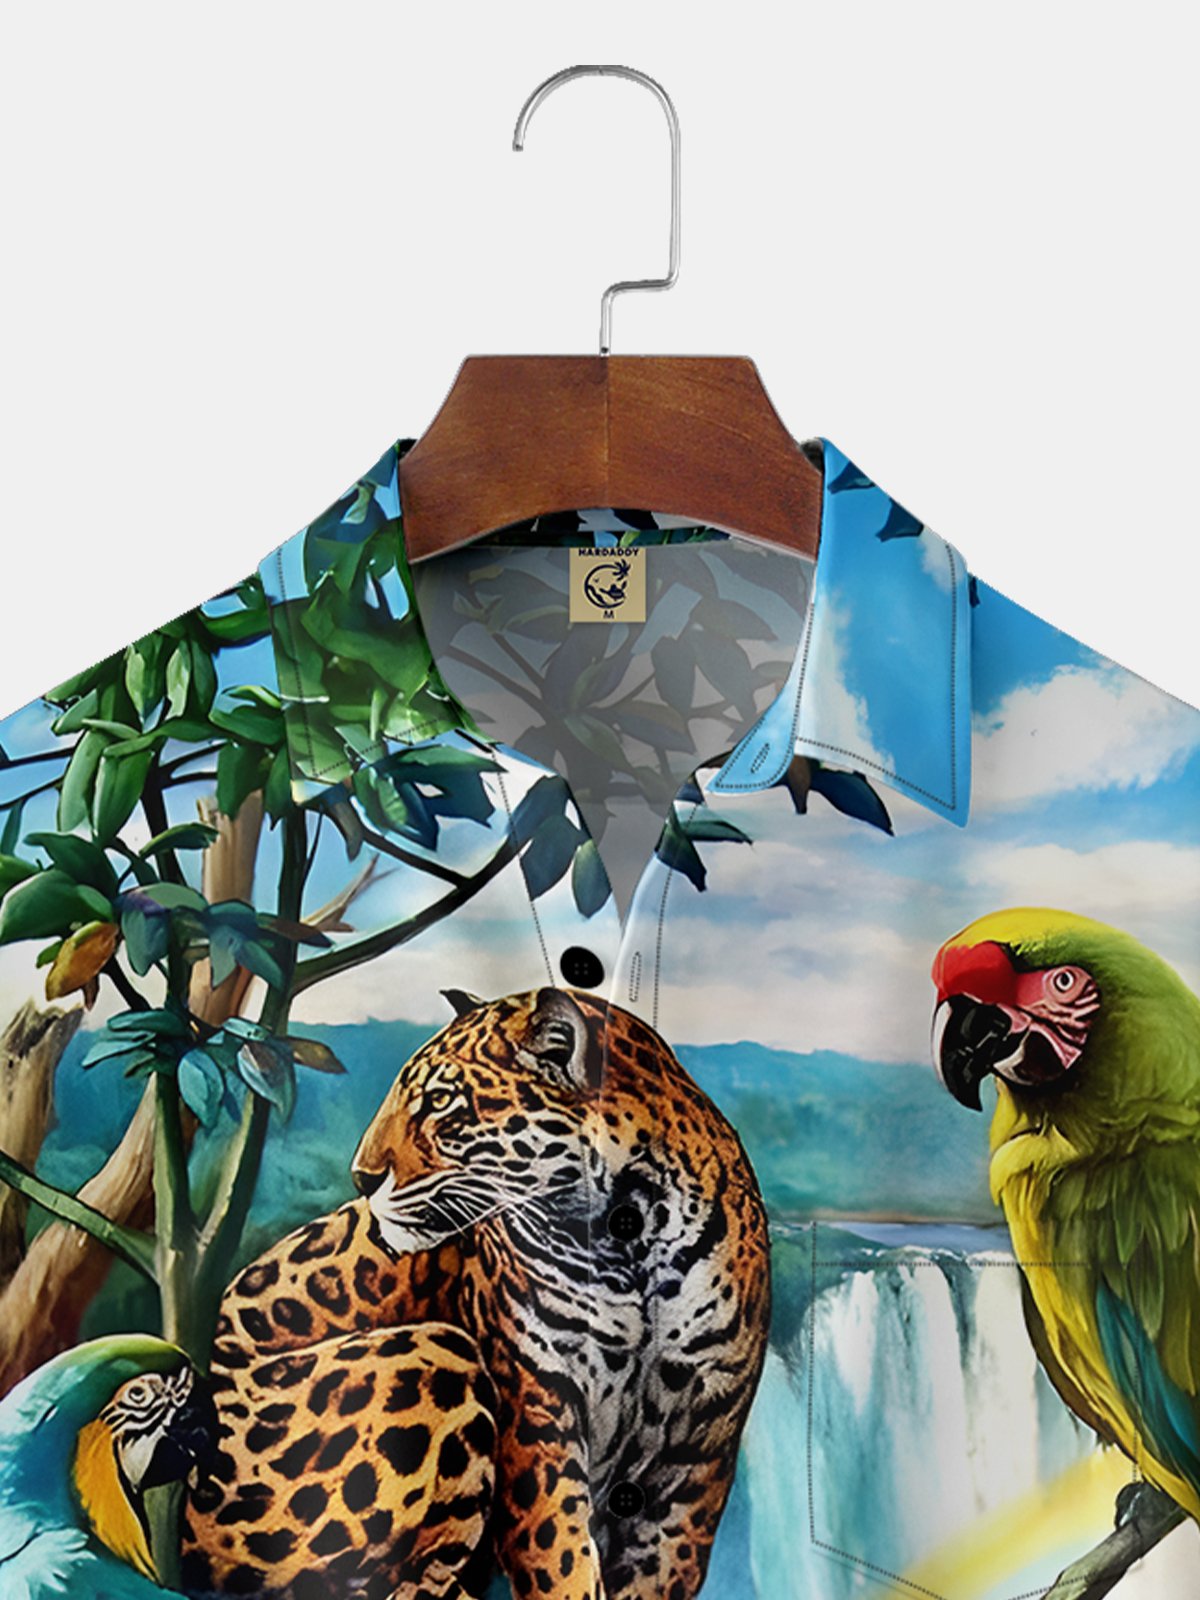 Moisture-wicking Panthera Pardus Chest Pocket Hawaiian Shirt